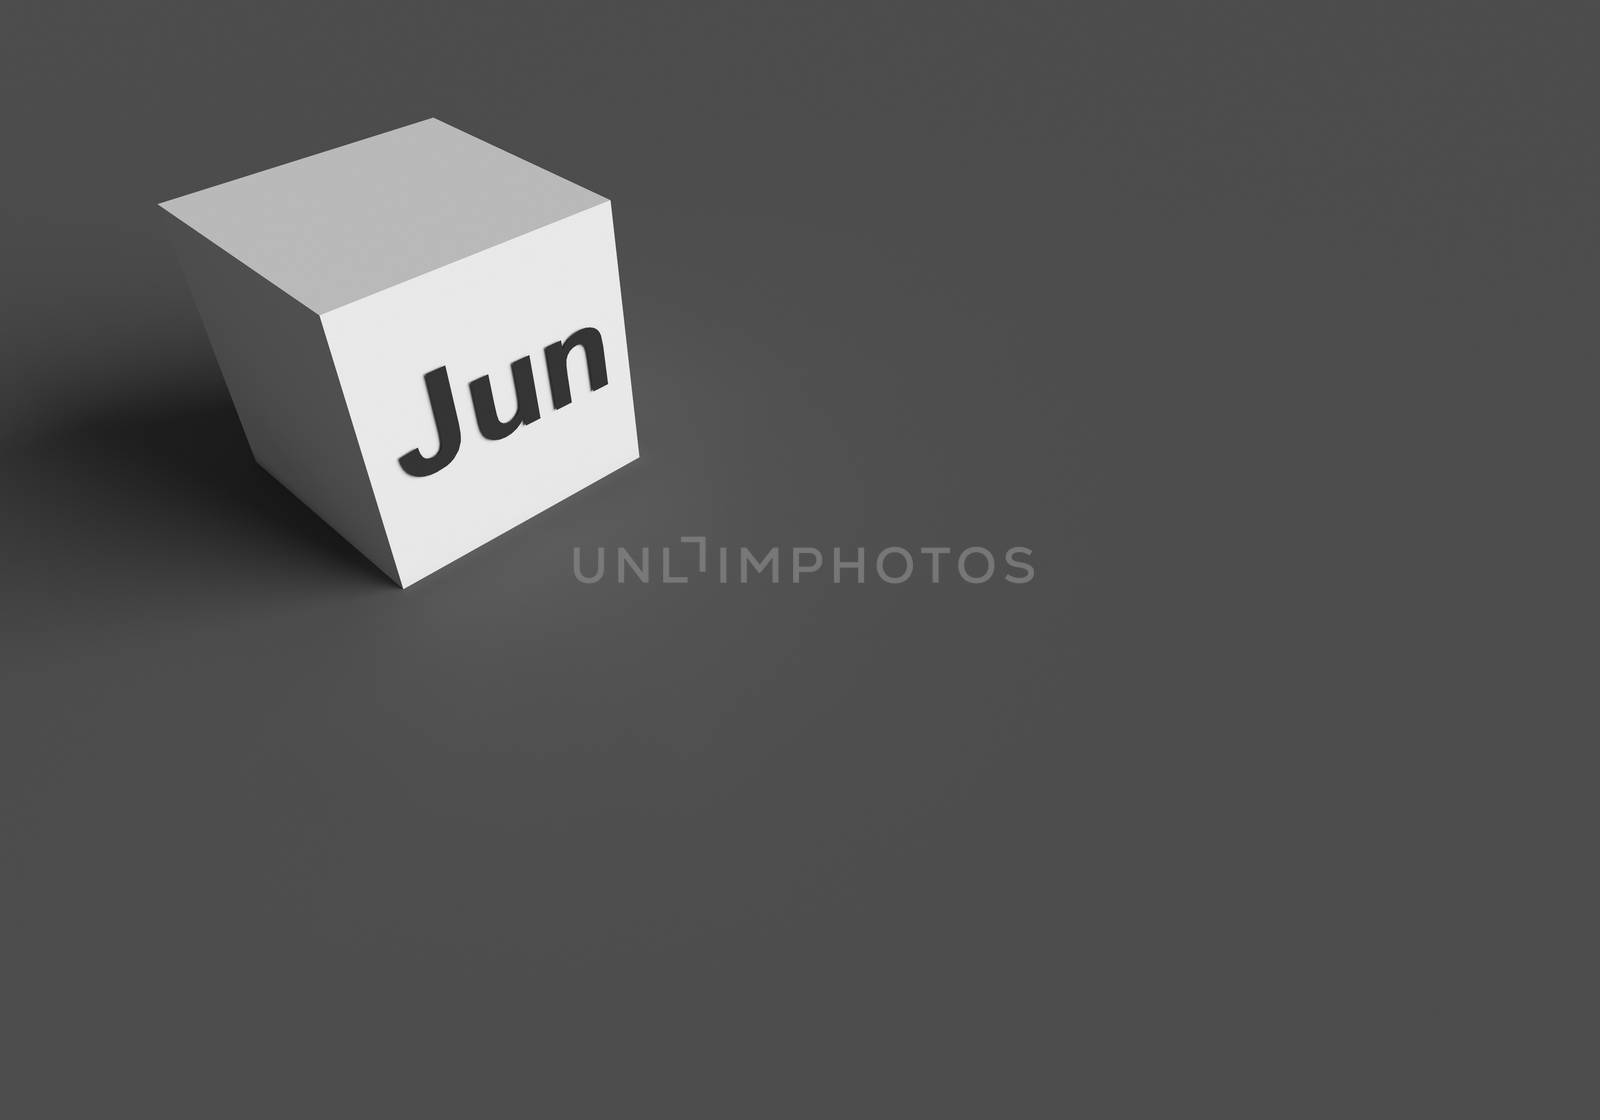 3D RENDERING OF "Jun" (ABBREVIATION OF JUNE) by PrettyTG